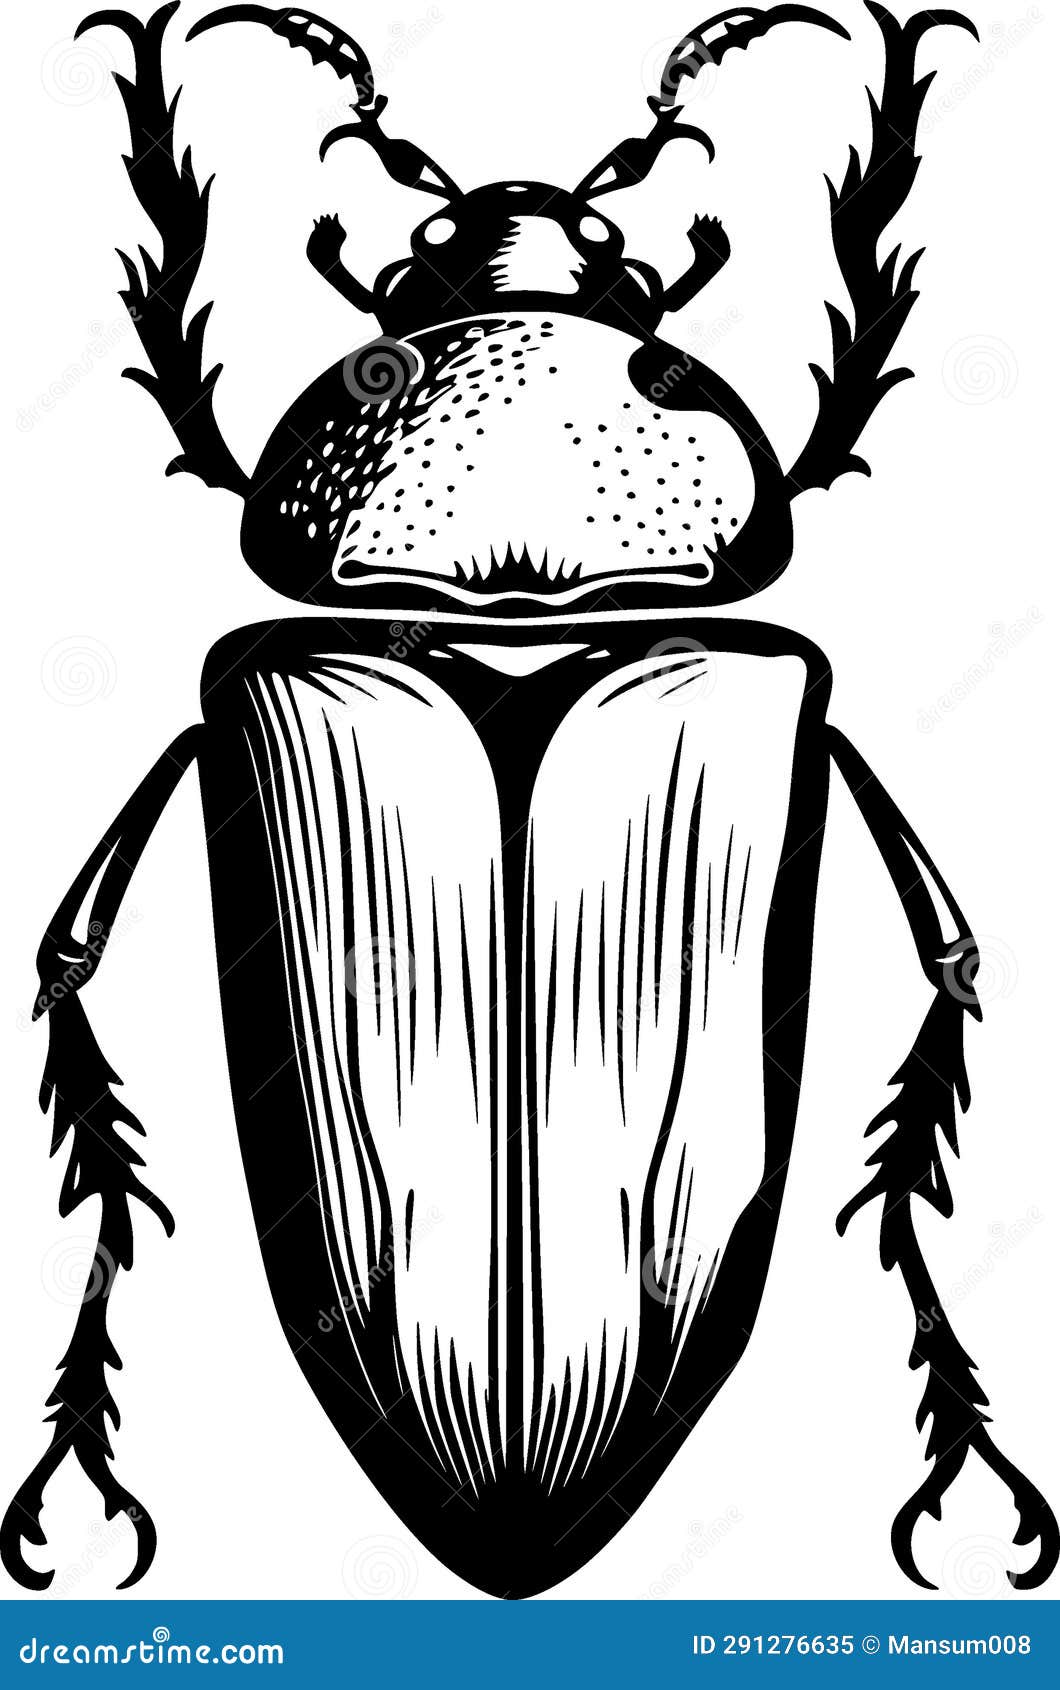 Black and White Illustration of Beetle Cartoon Stock Illustration ...